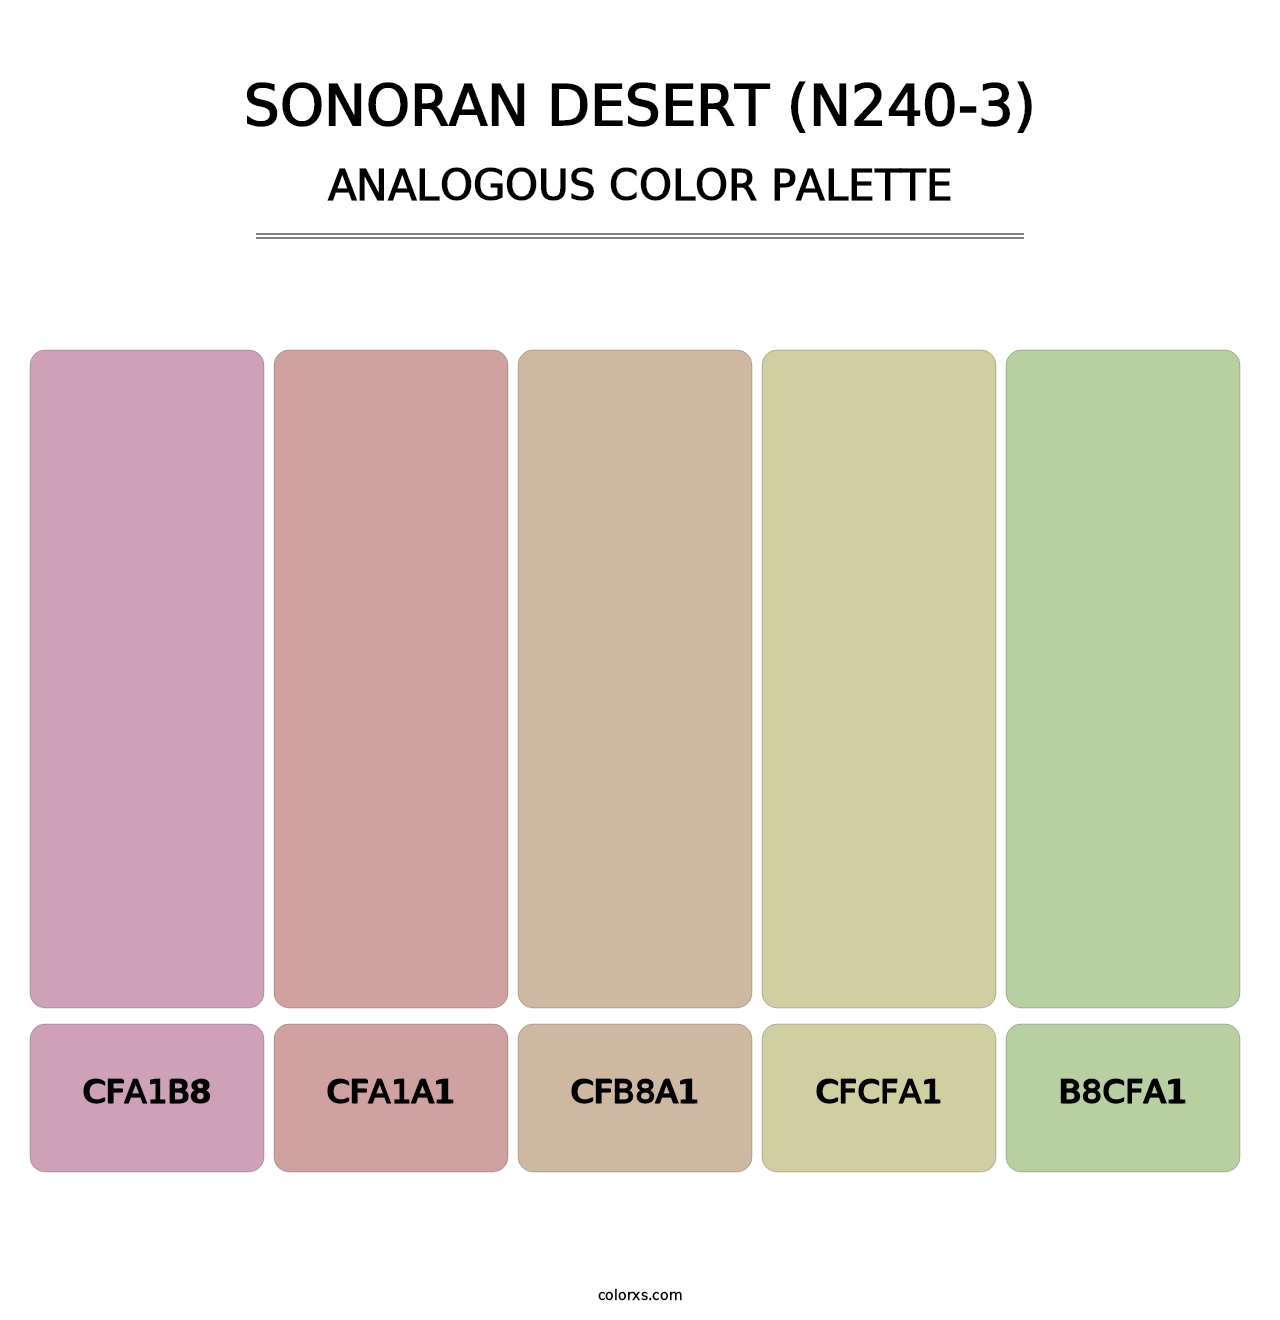 Sonoran Desert (N240-3) - Analogous Color Palette